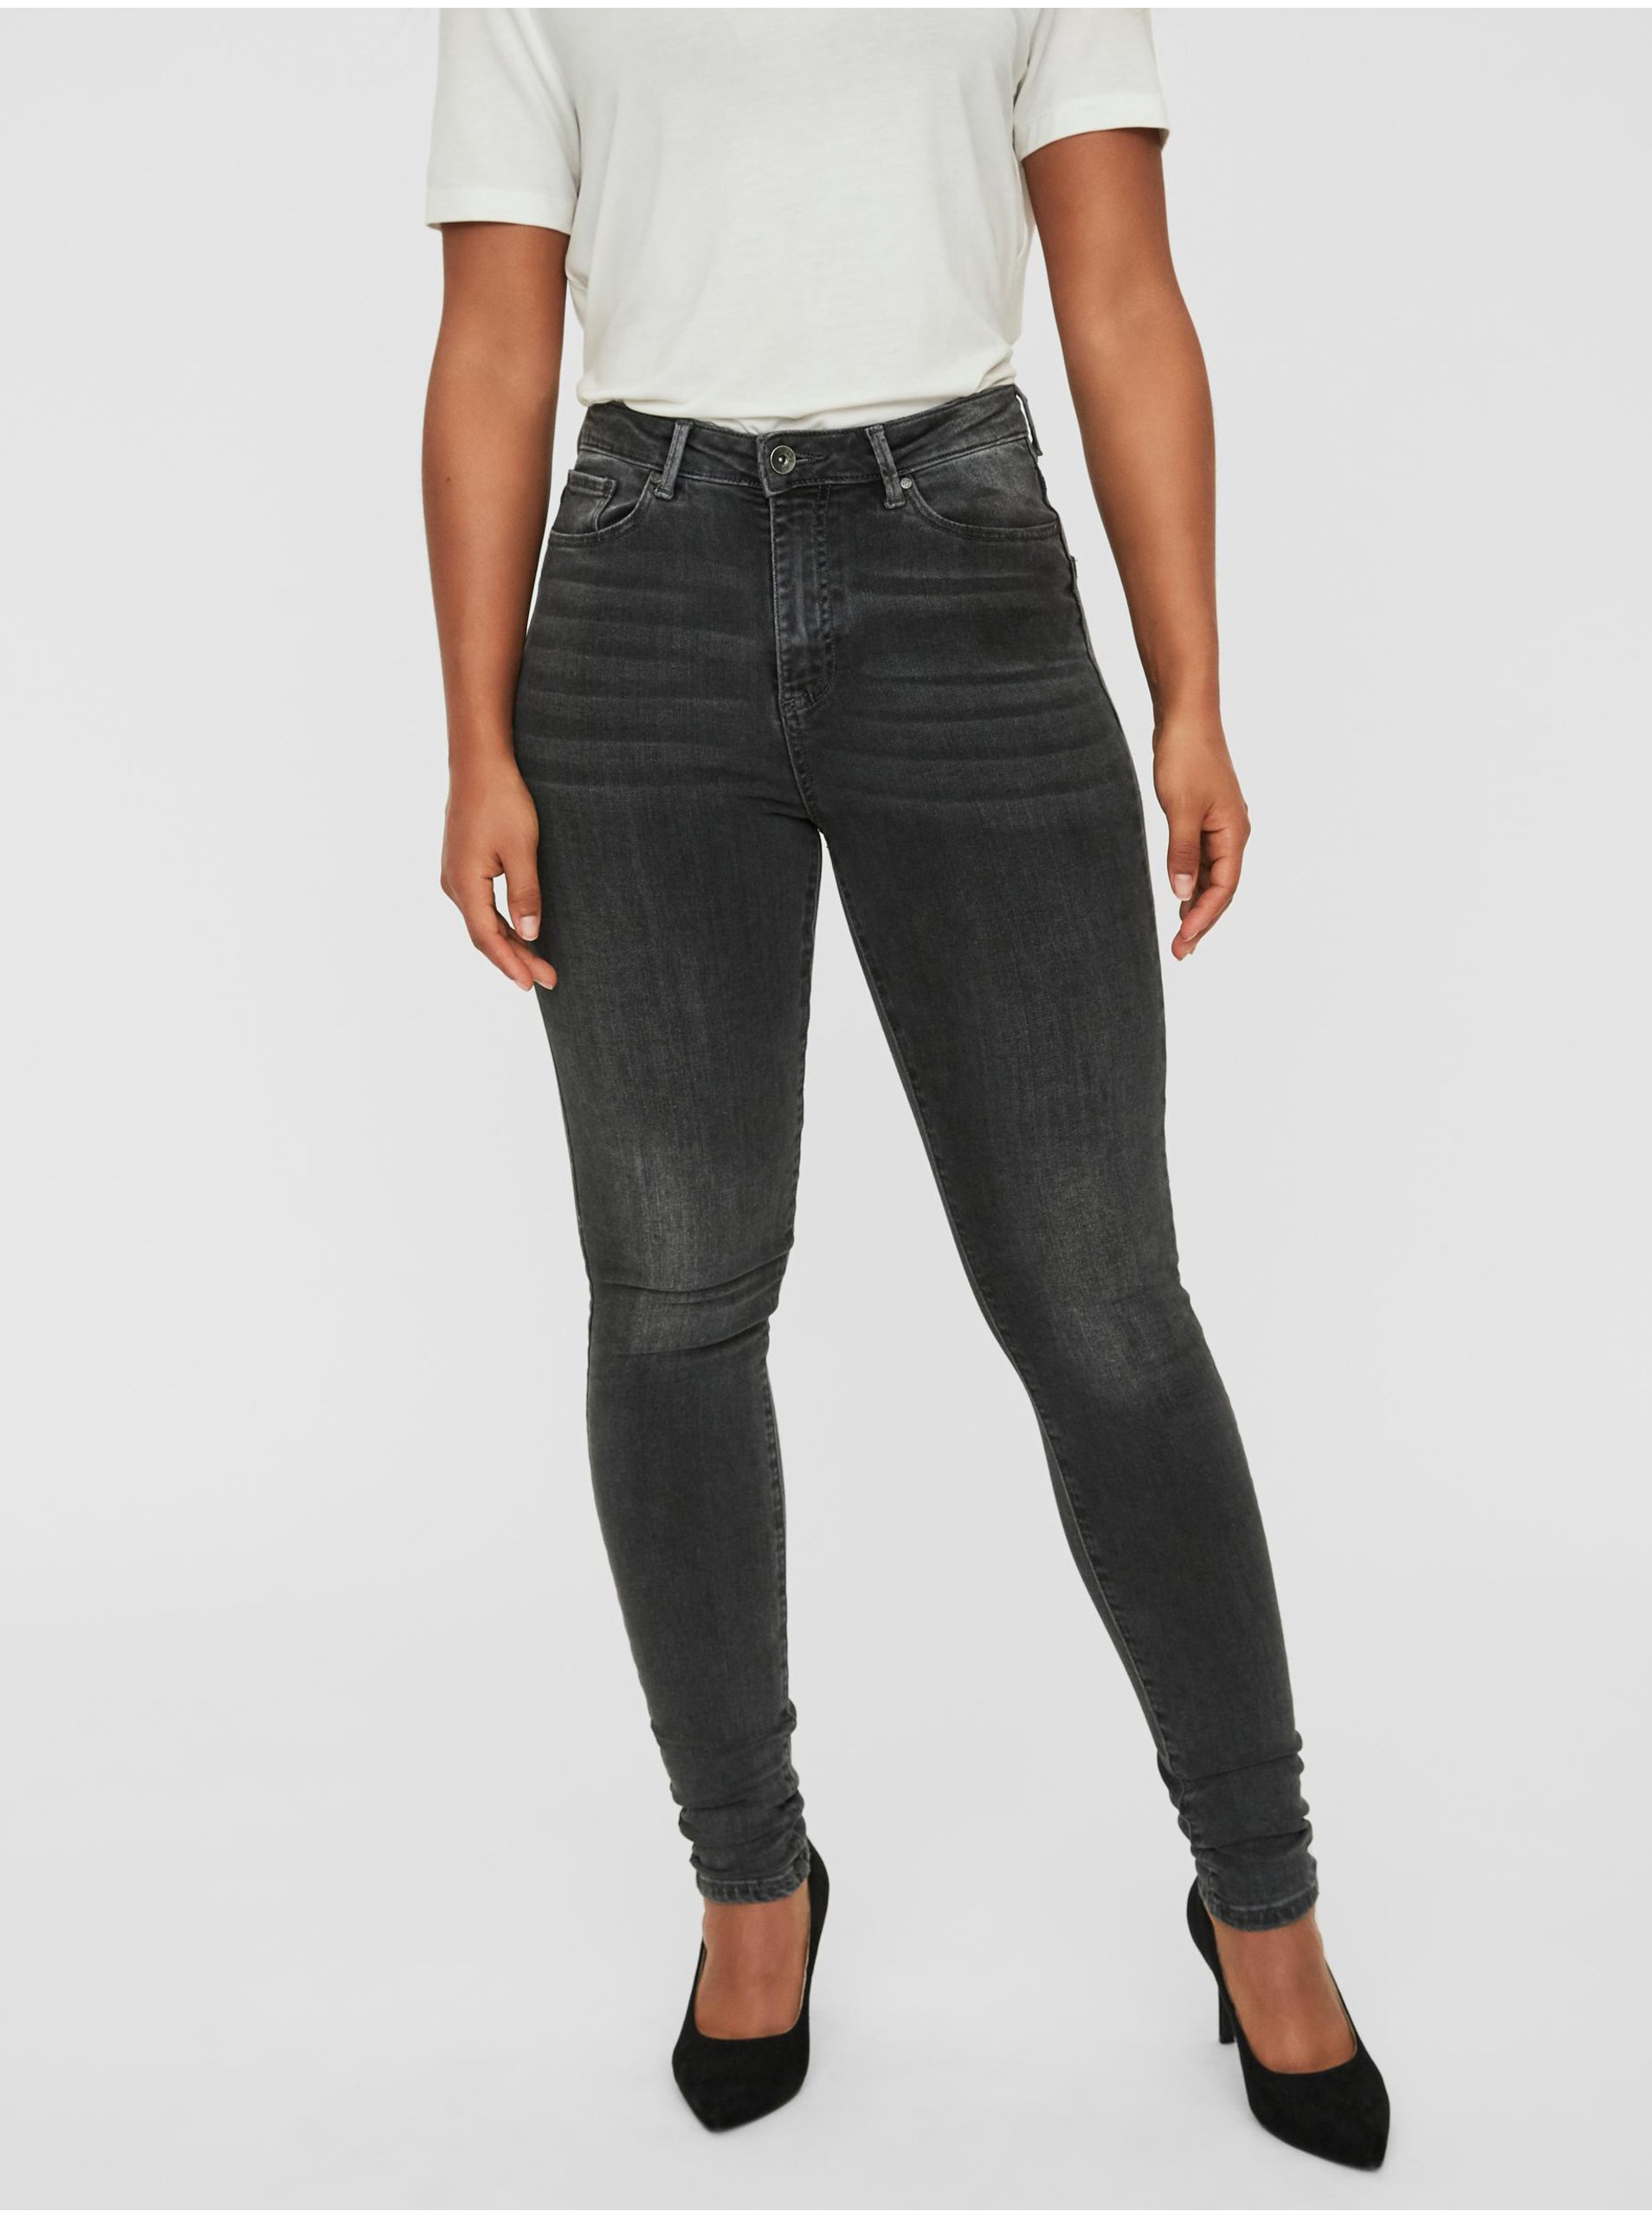 Dark grey women's skinny fit jeans VERO MODA - Women